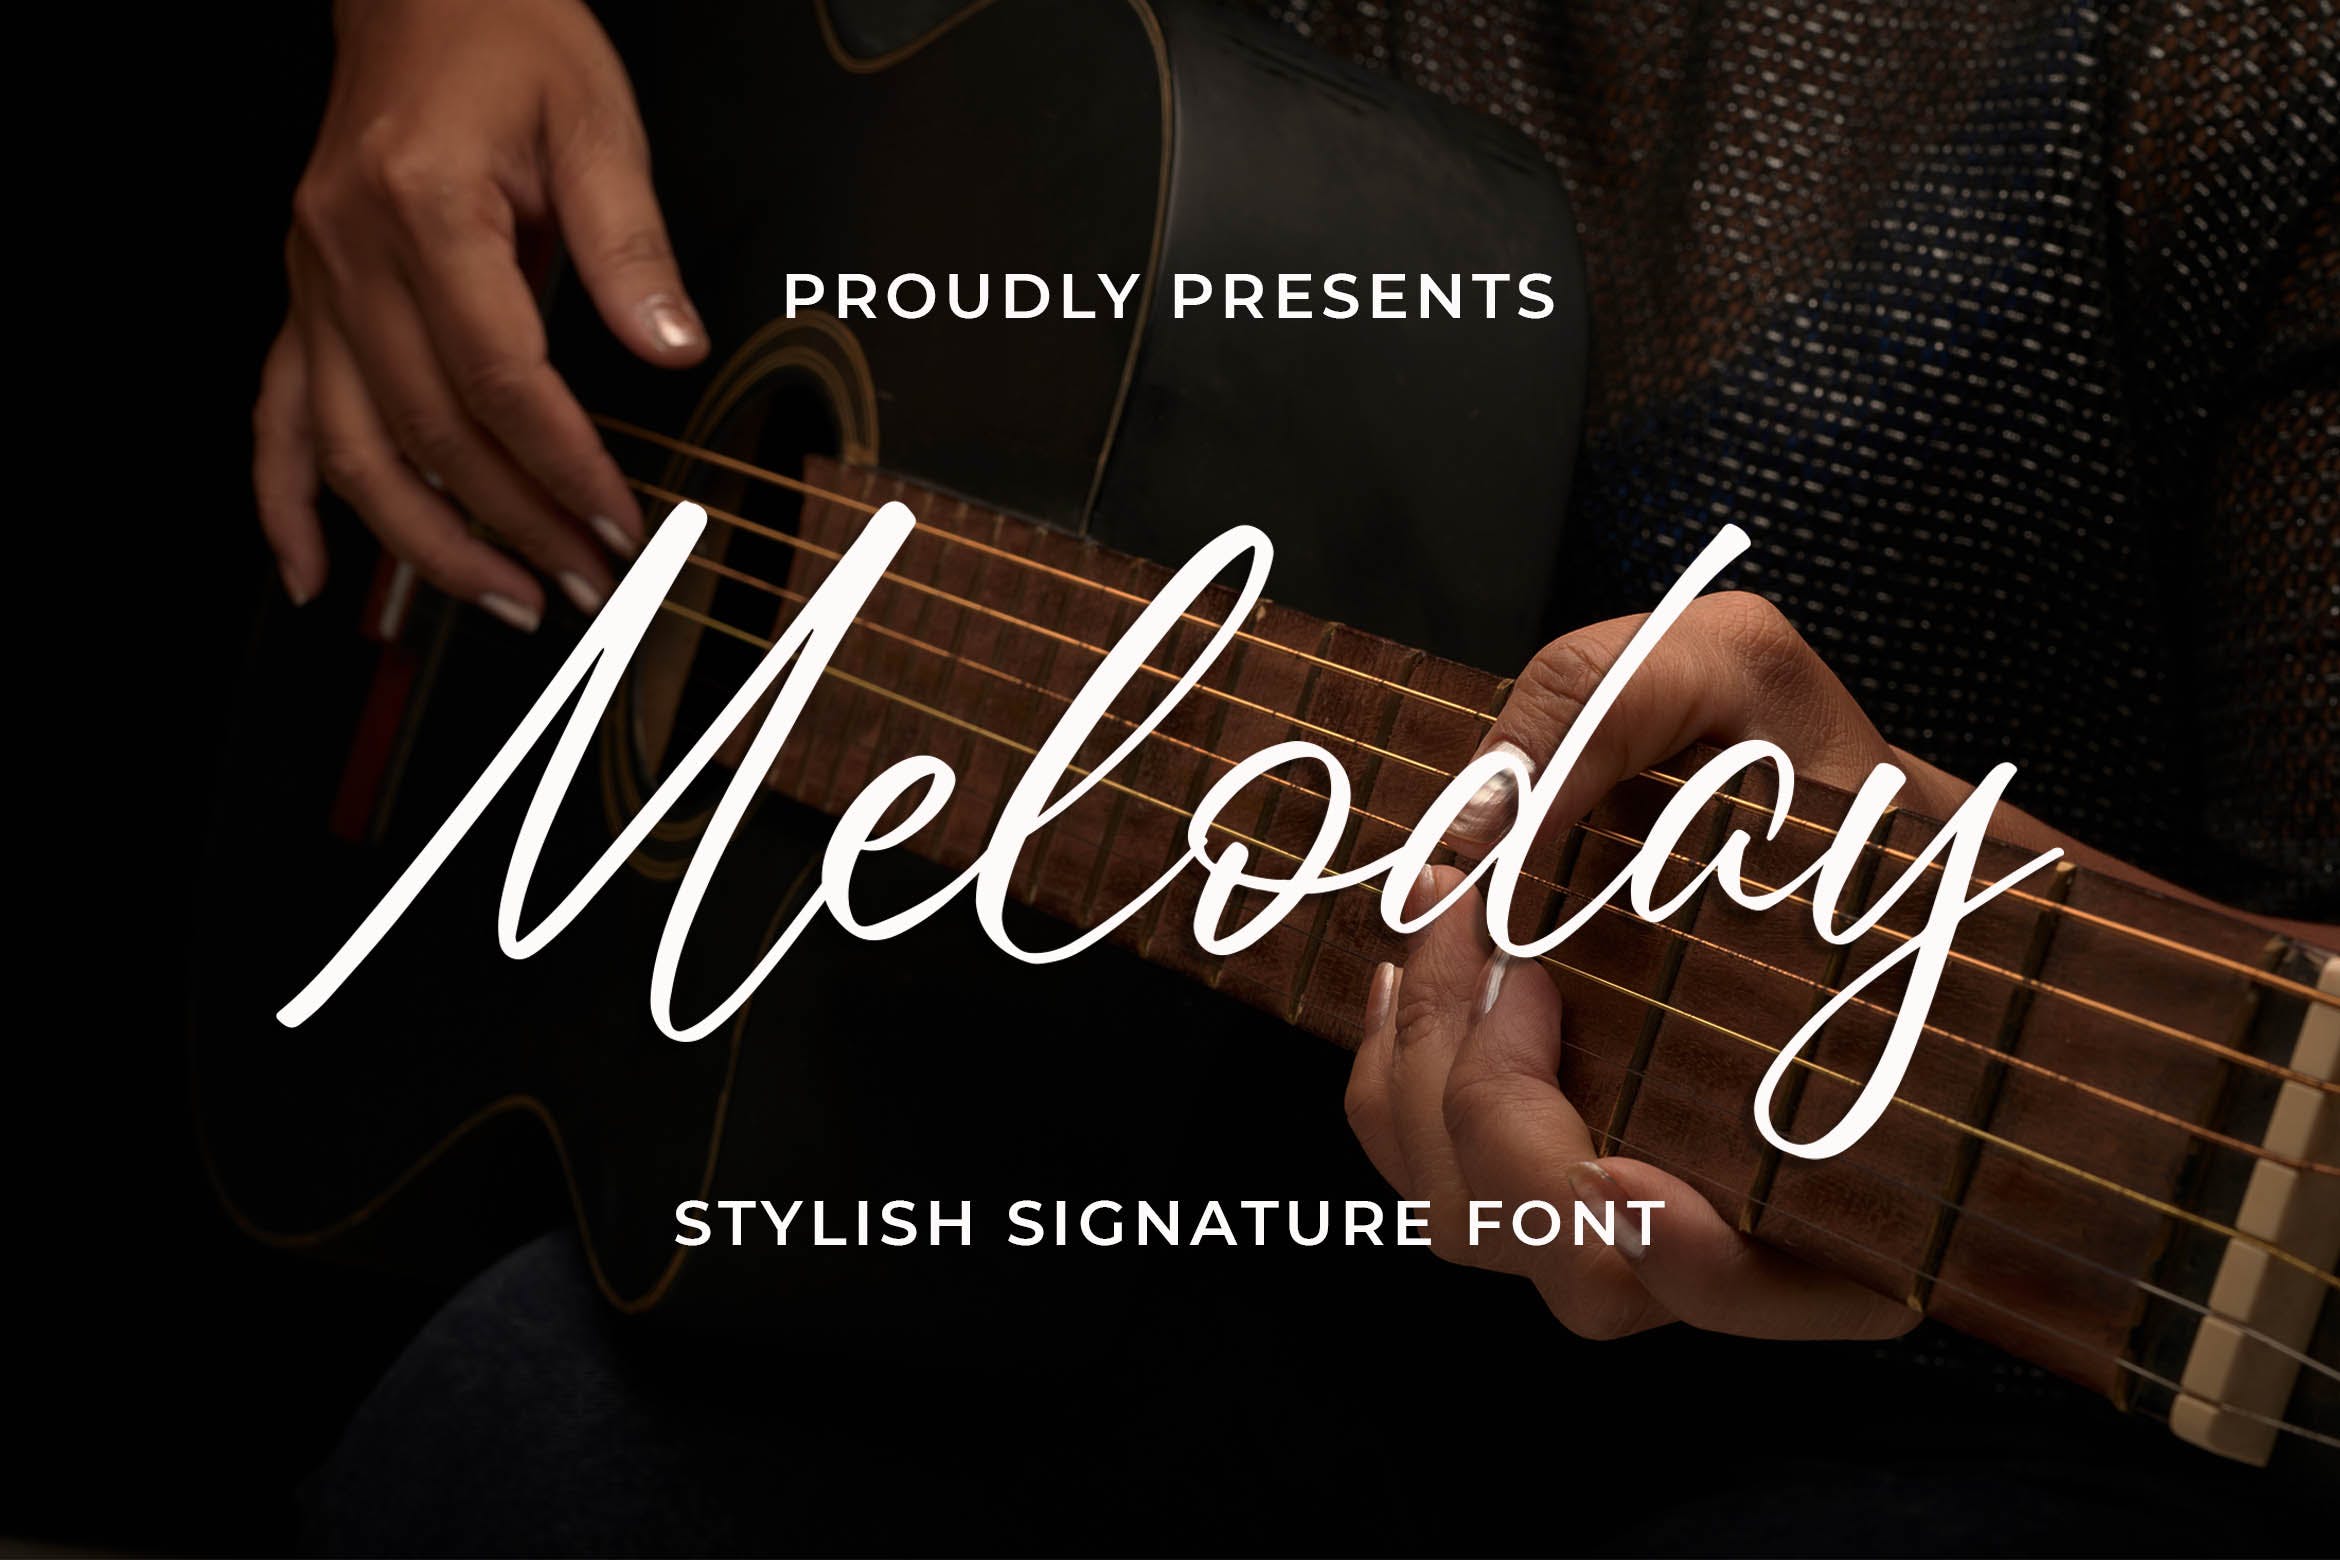 英文时尚签名手写字体素材库精选 Meloday – Stylish Signature Font插图